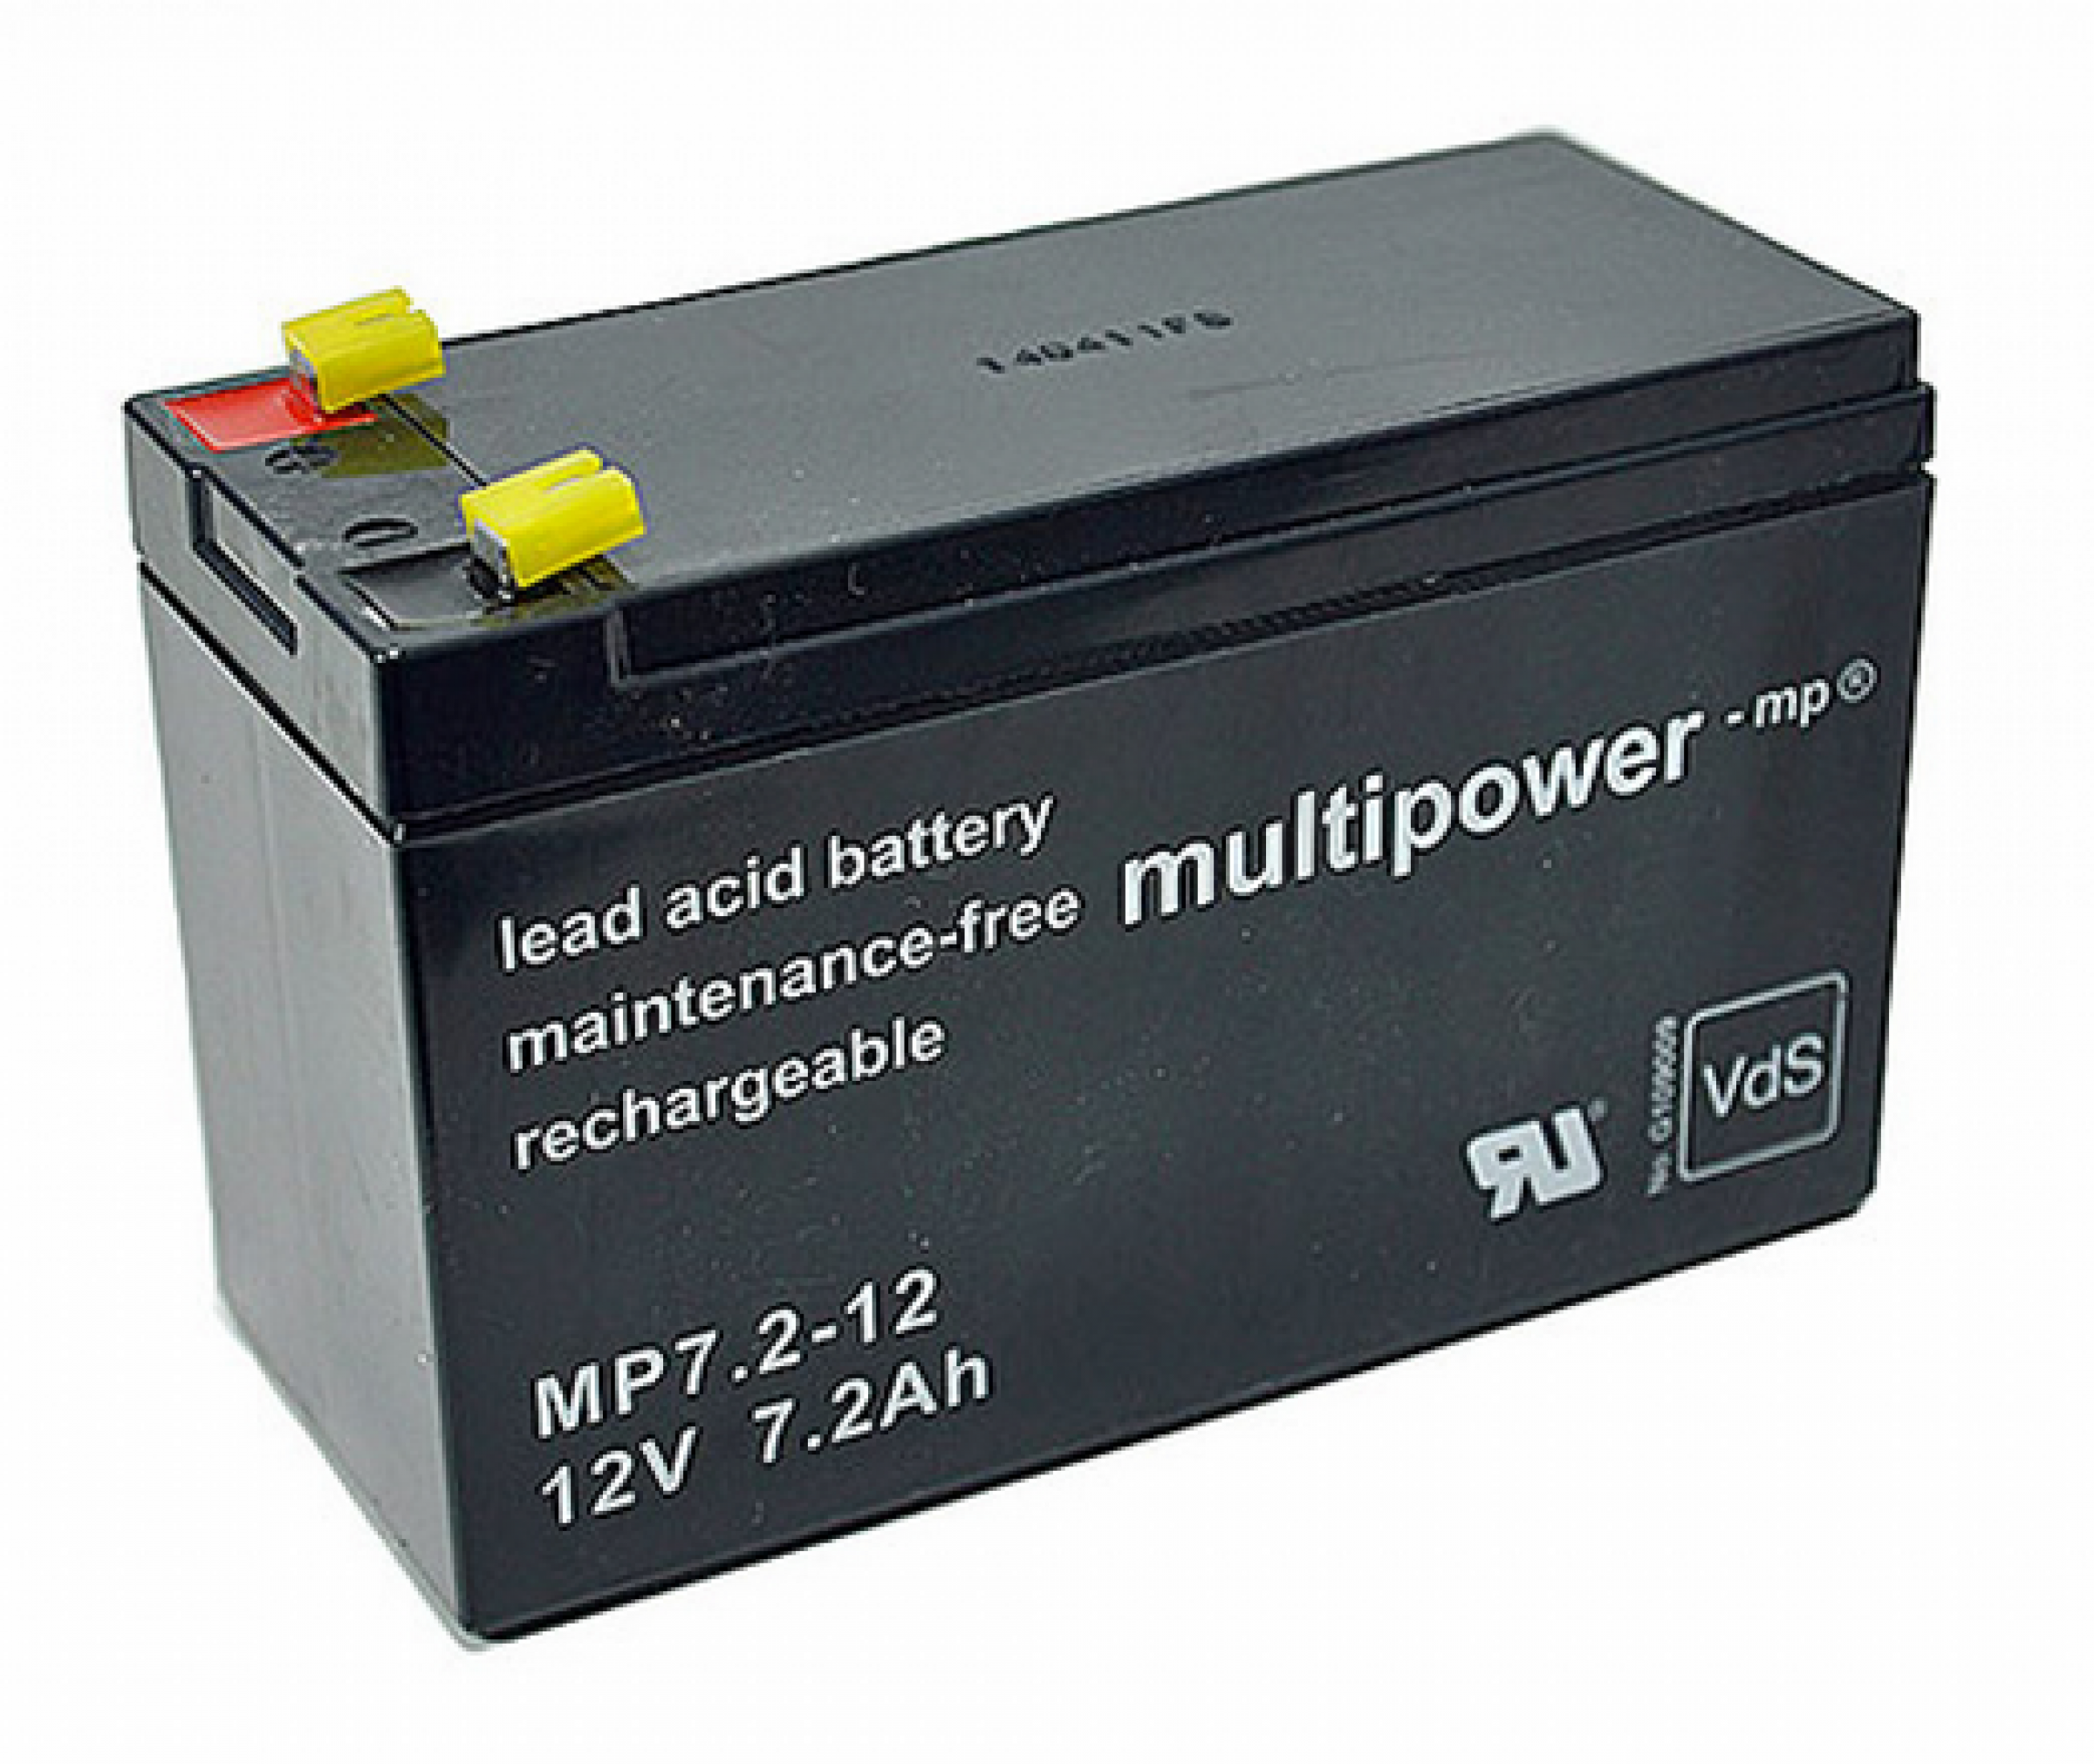 Multipower lead-acid battery MP7.2-12 VDS [12V 7.2Ah] 151x65x102